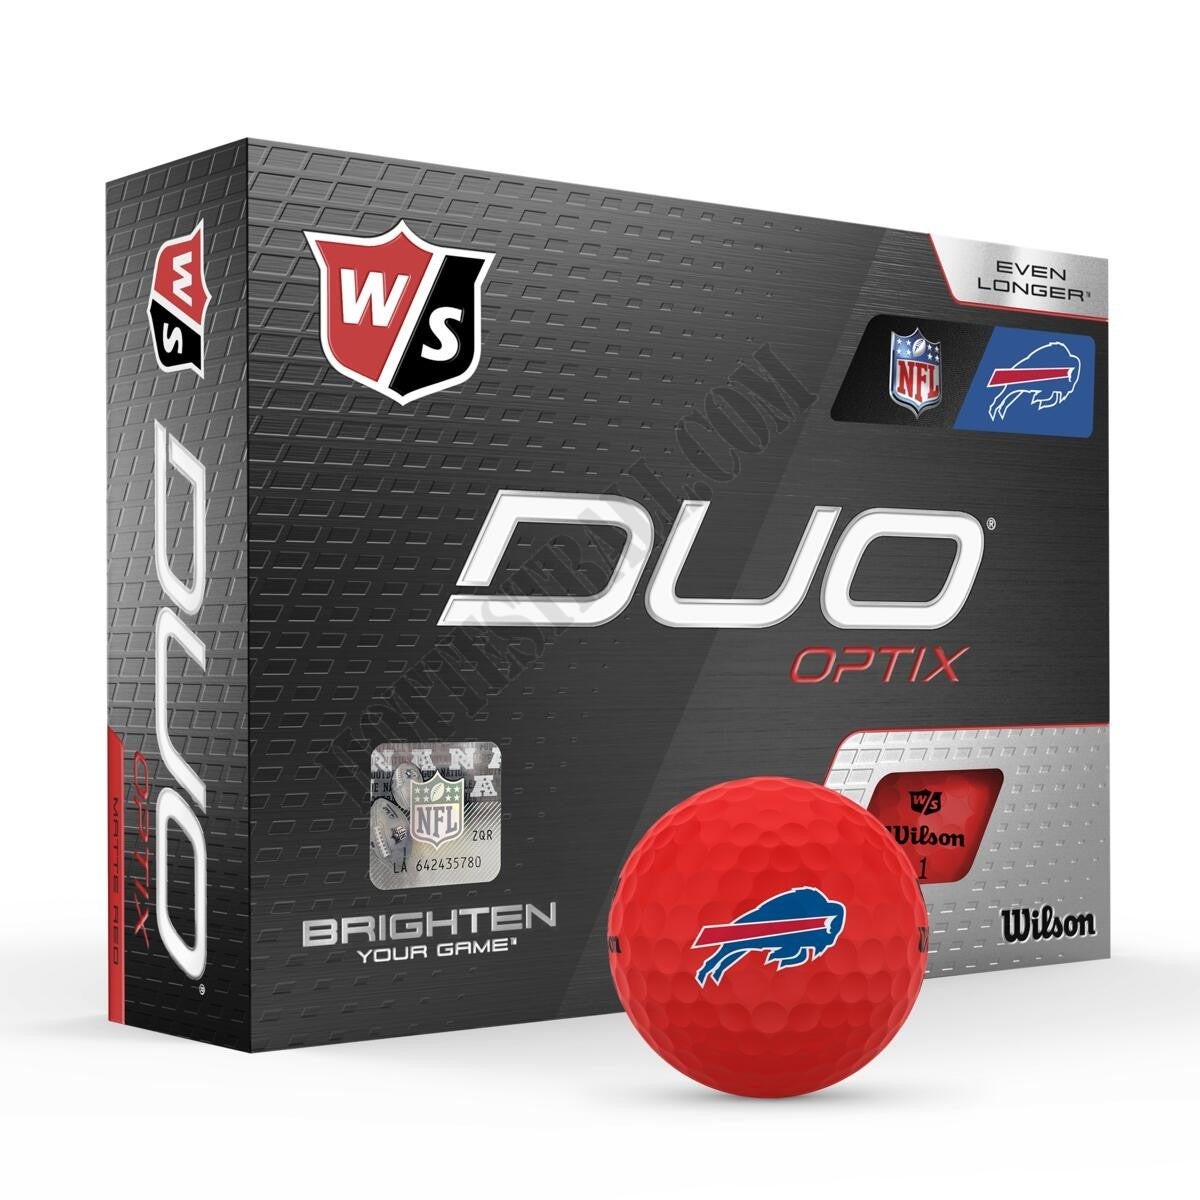 Duo Optix NFL Golf Balls - Buffalo Bills ● Wilson Promotions - Duo Optix NFL Golf Balls - Buffalo Bills ● Wilson Promotions